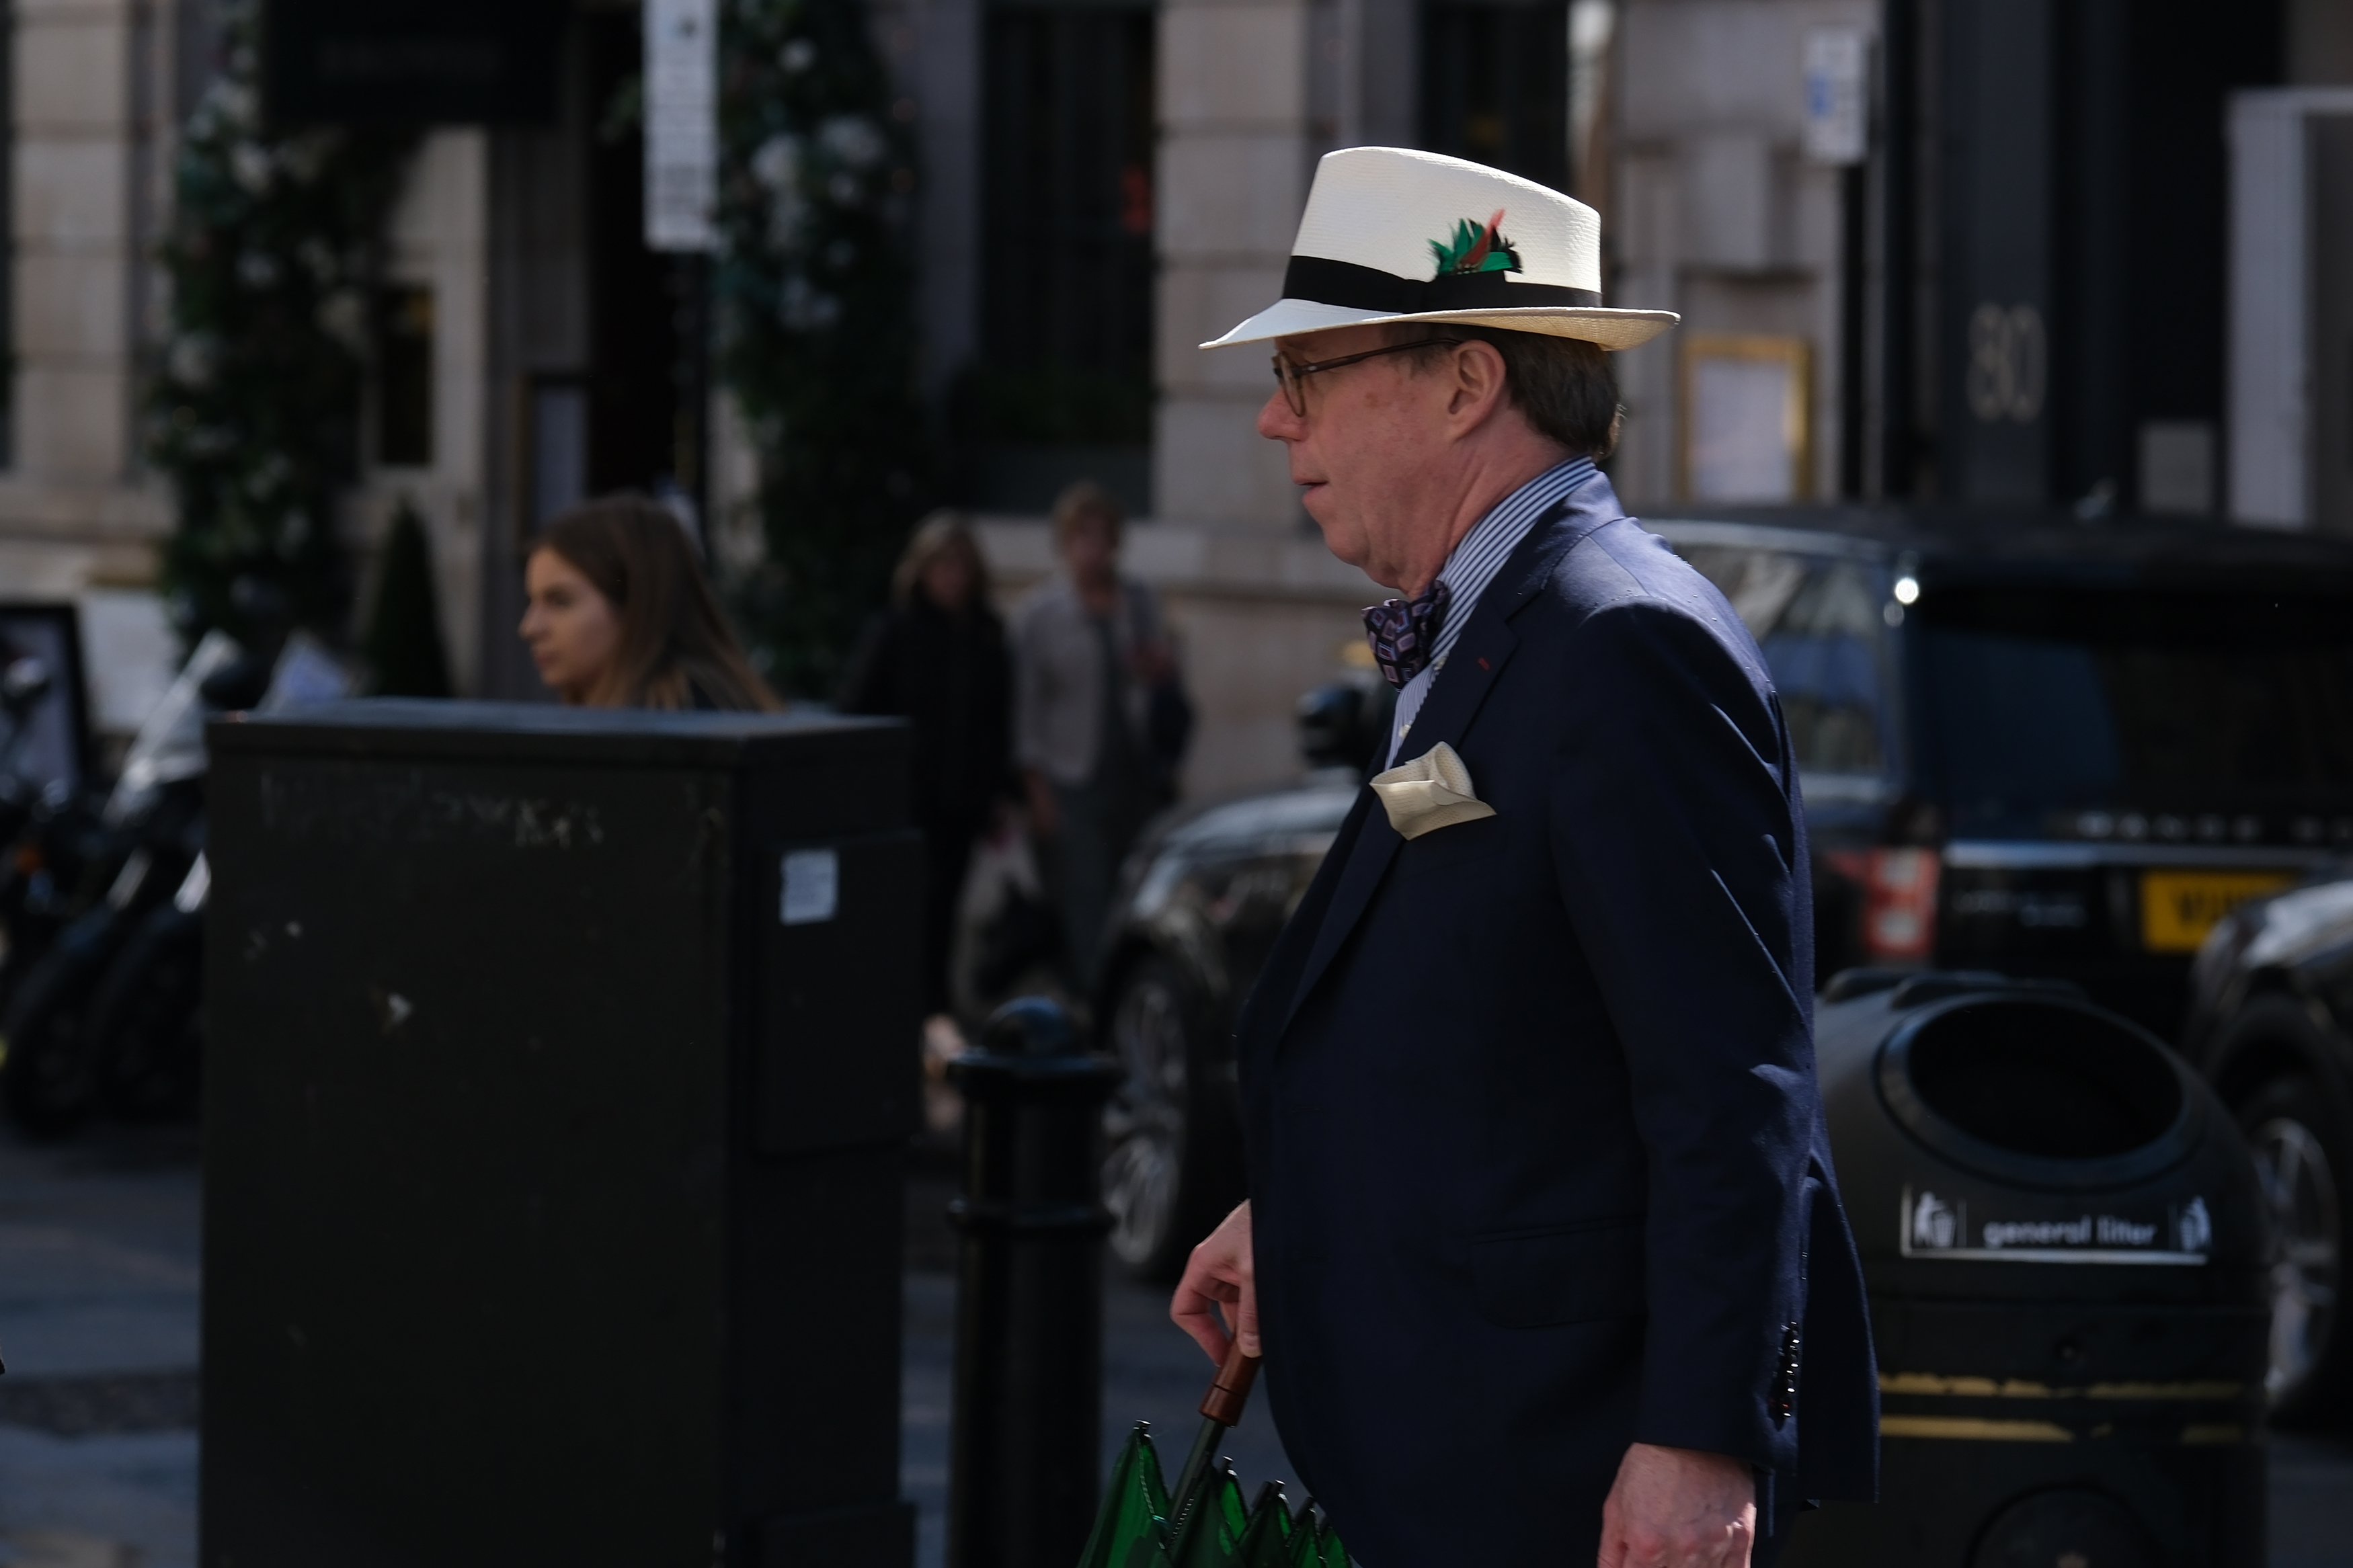 A man in a hat walking through a London street